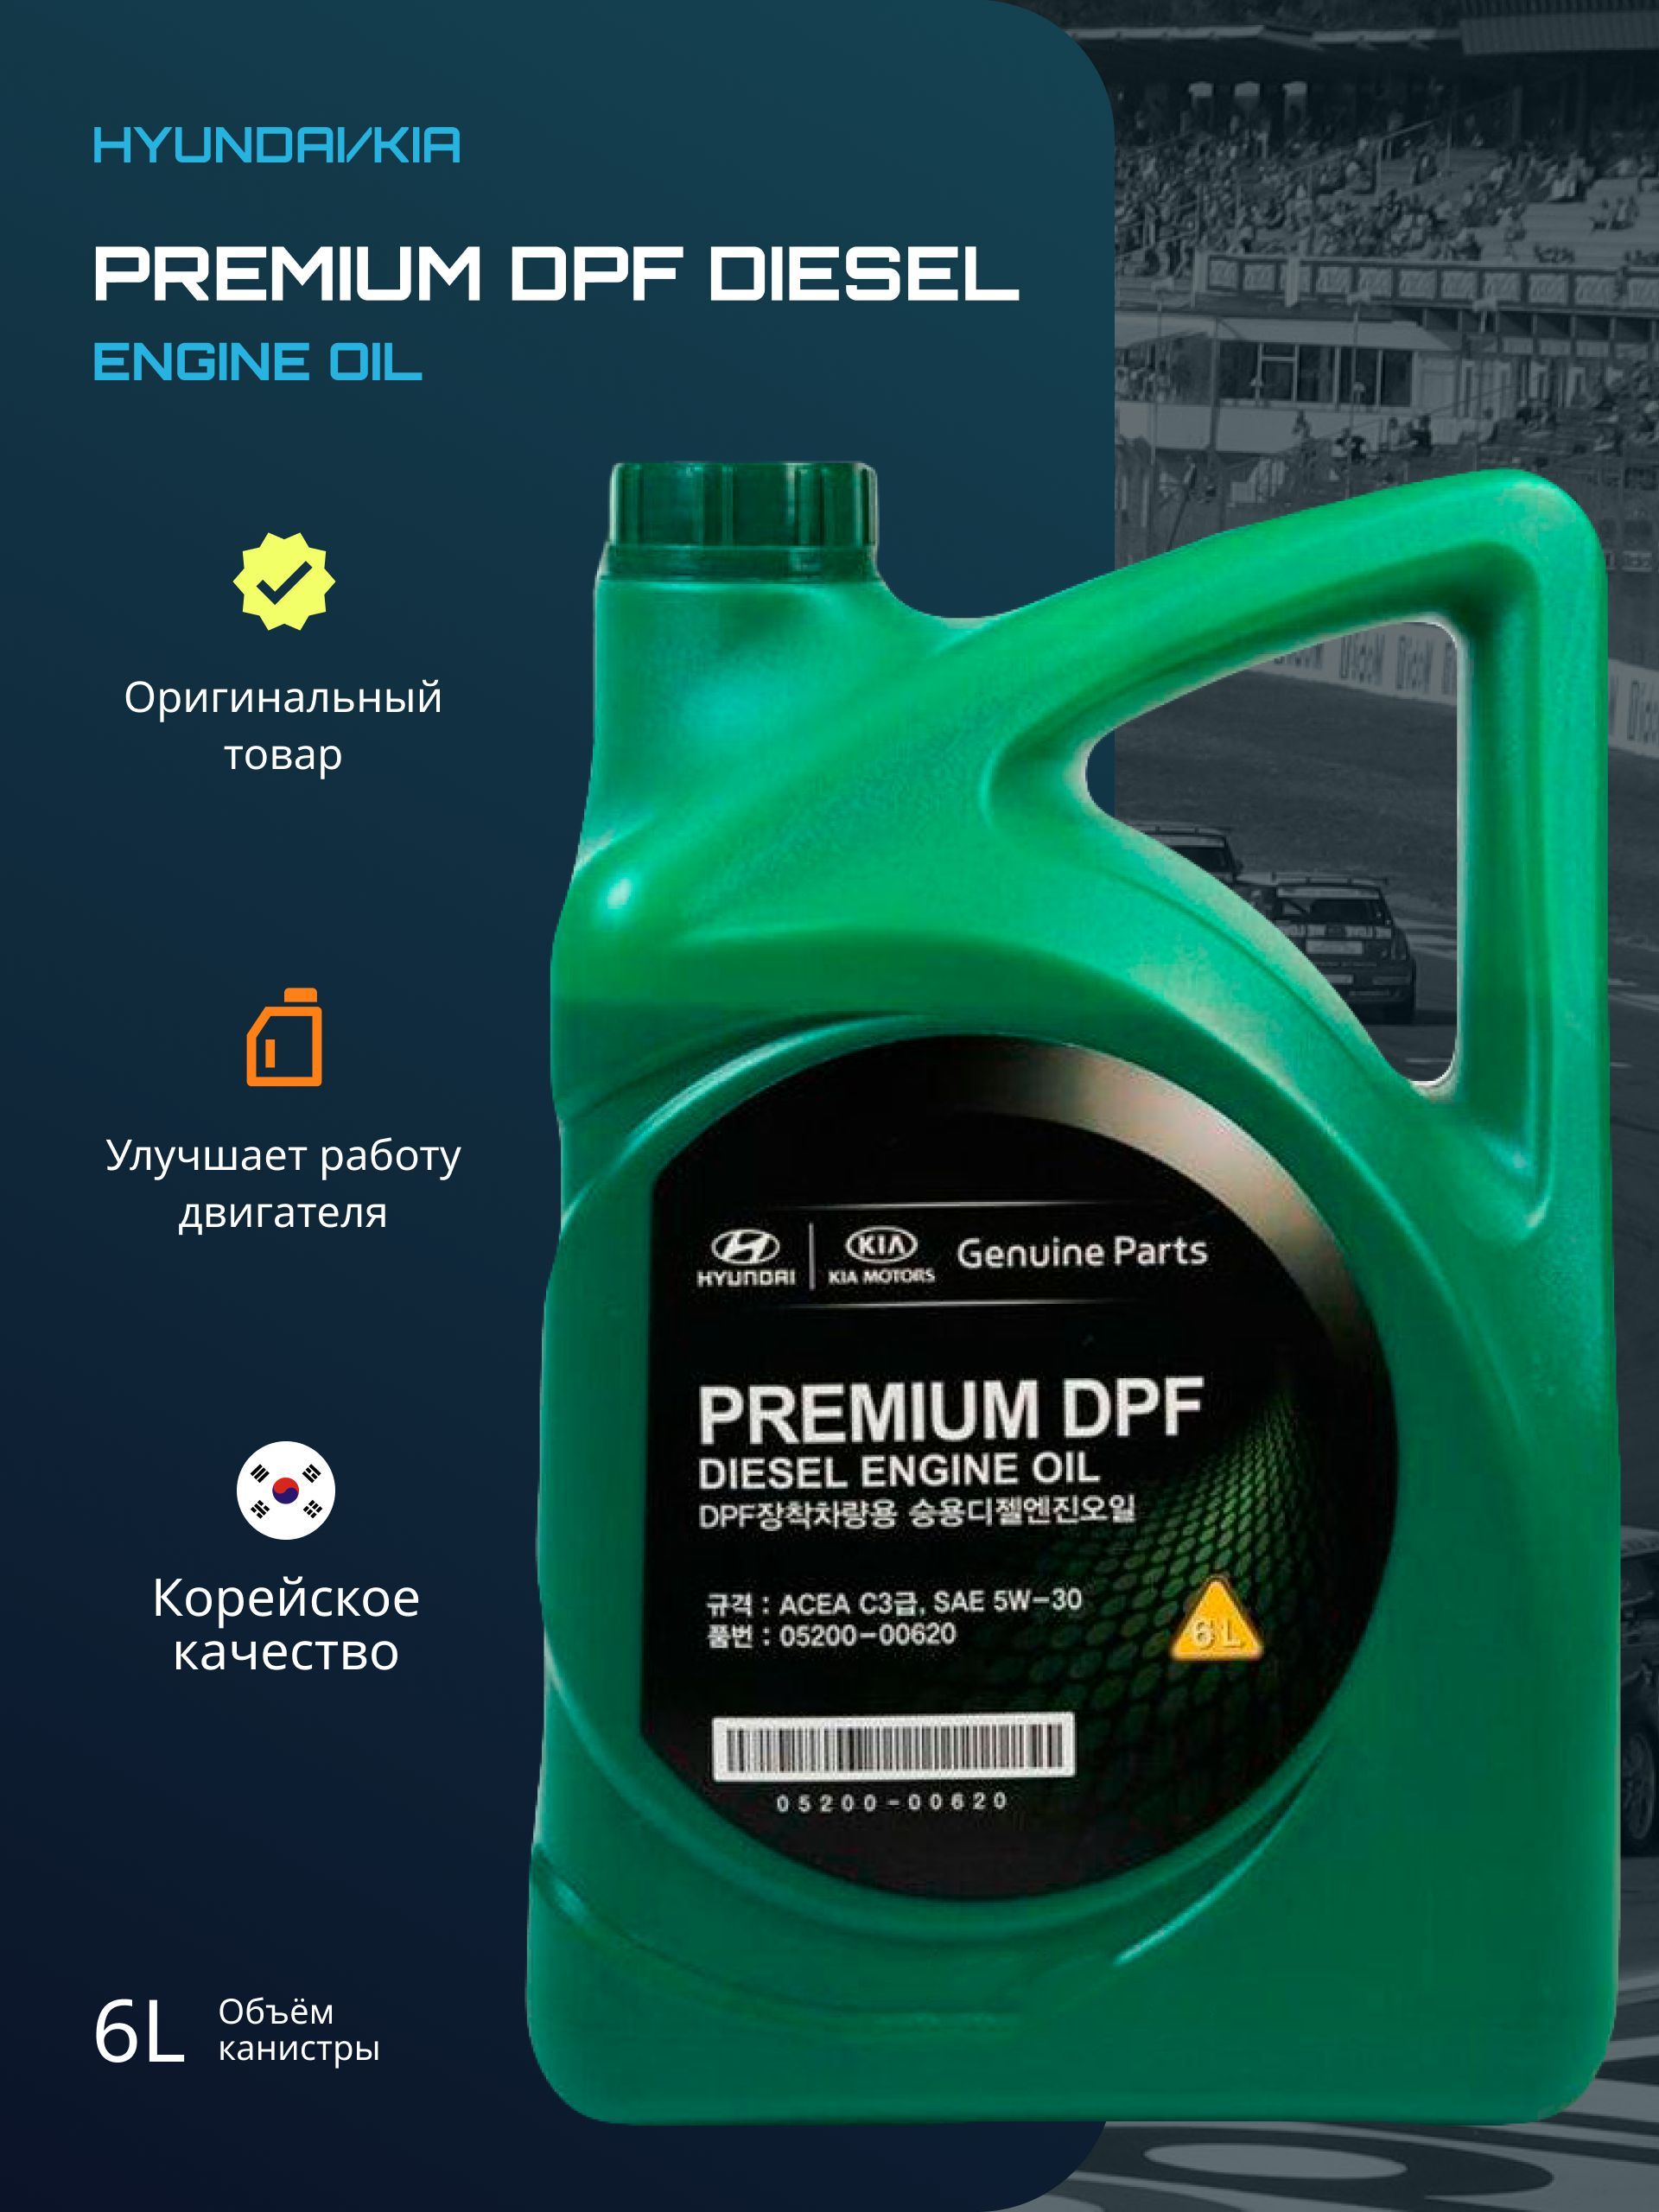 Hyundai Premium DPF Diesel. 0520000620 Hyundai-Kia масло мотор. 6л. Prem. DPF Diesel 5w-30. Как расшифровать дату производства масла Kia Premium DPF Diesel. Моторное масло premium dpf diesel